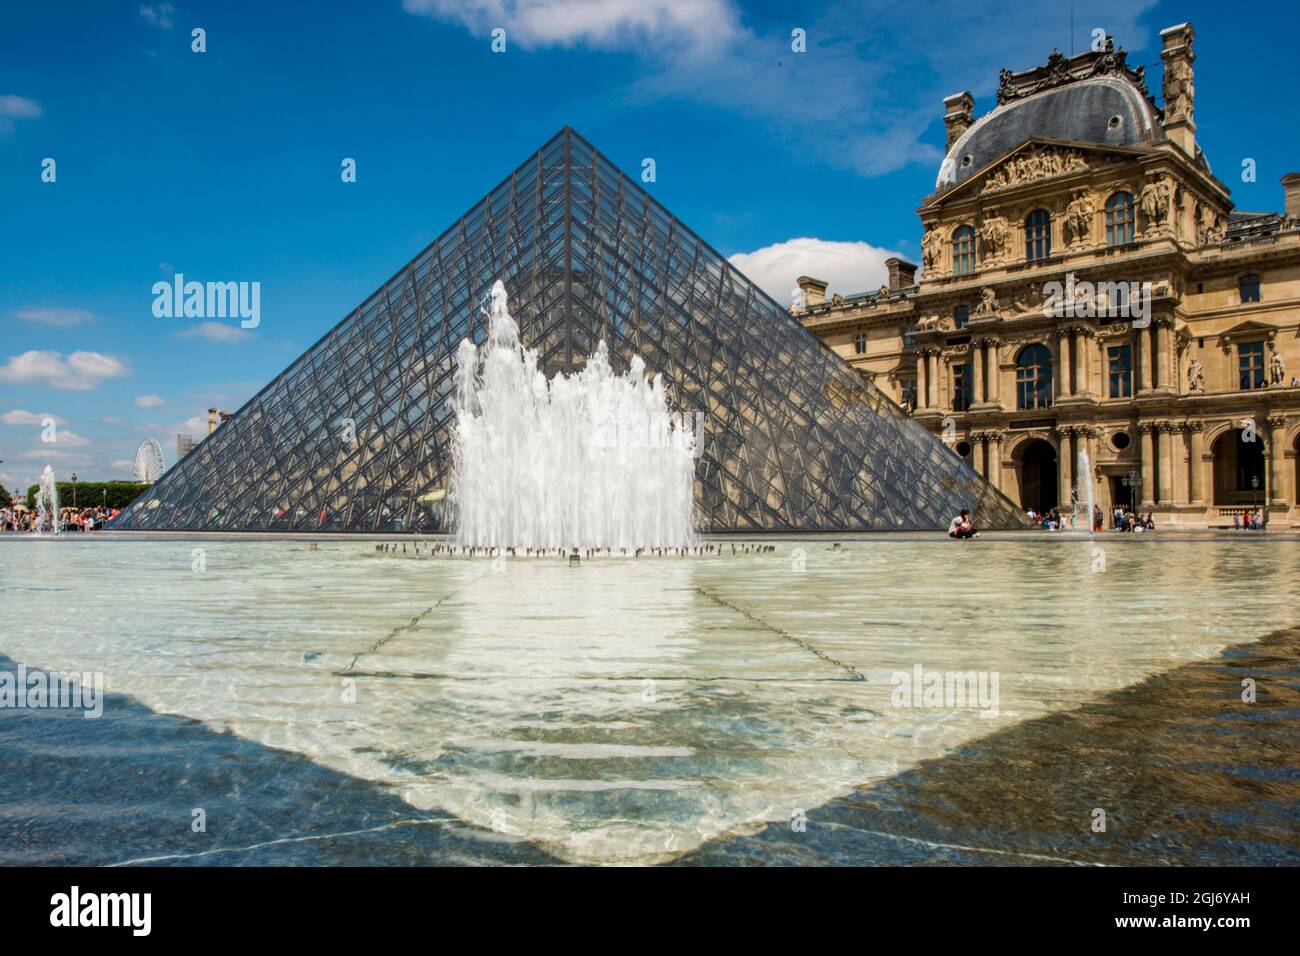 Leoh Ming Pei glass pyramid in Napoleon Courtyard, The Louvre, Paris ...